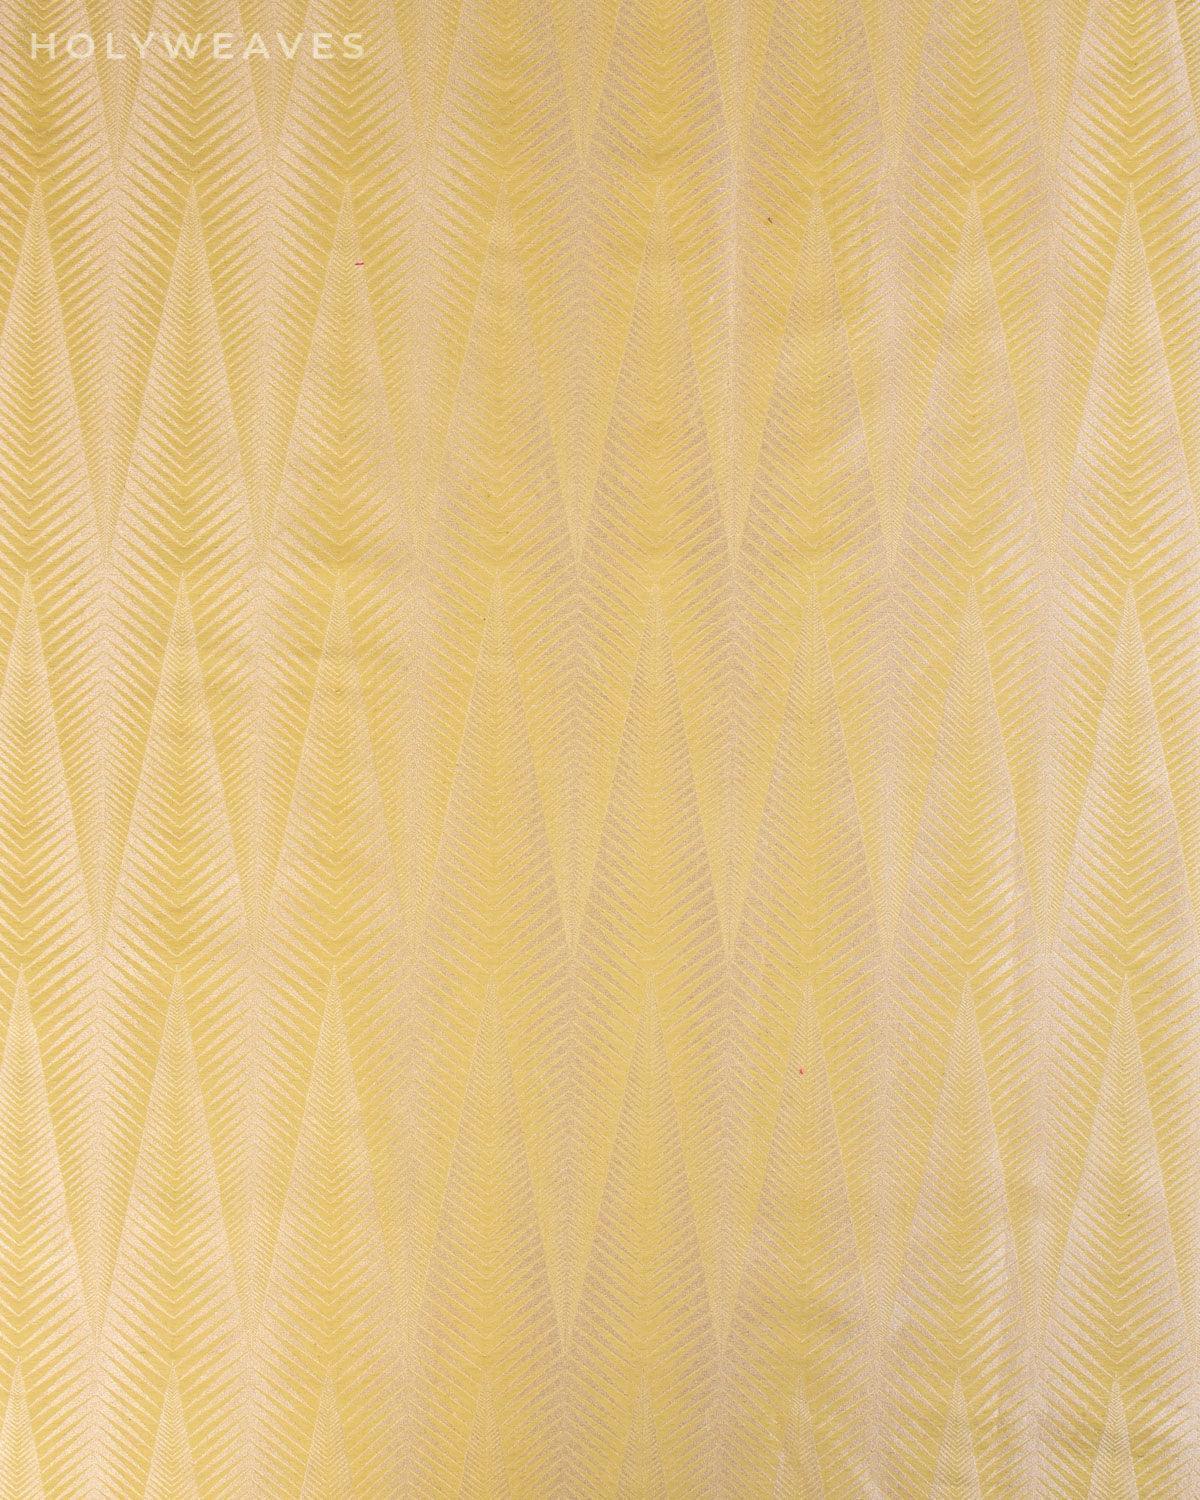 Mellow Yellow Banarasi Geometric Brocade Handwoven Cotton Silk Fabric - By HolyWeaves, Benares